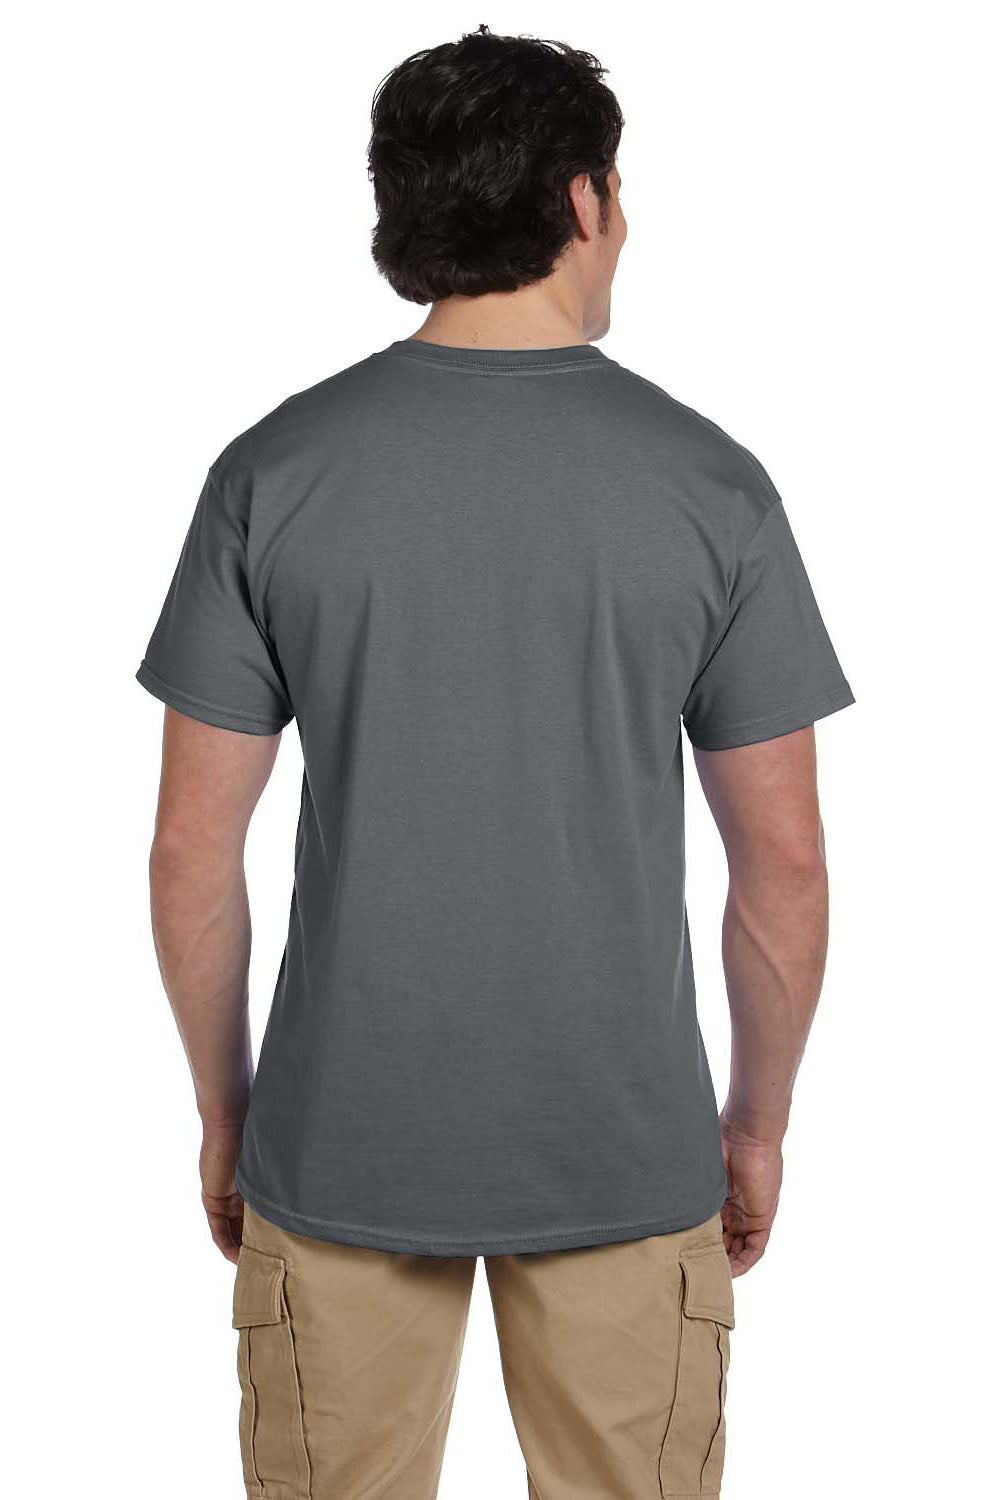 Fruit Of The Loom 3931 Mens HD Jersey Short Sleeve Crewneck T-Shirt Charcoal Grey Back